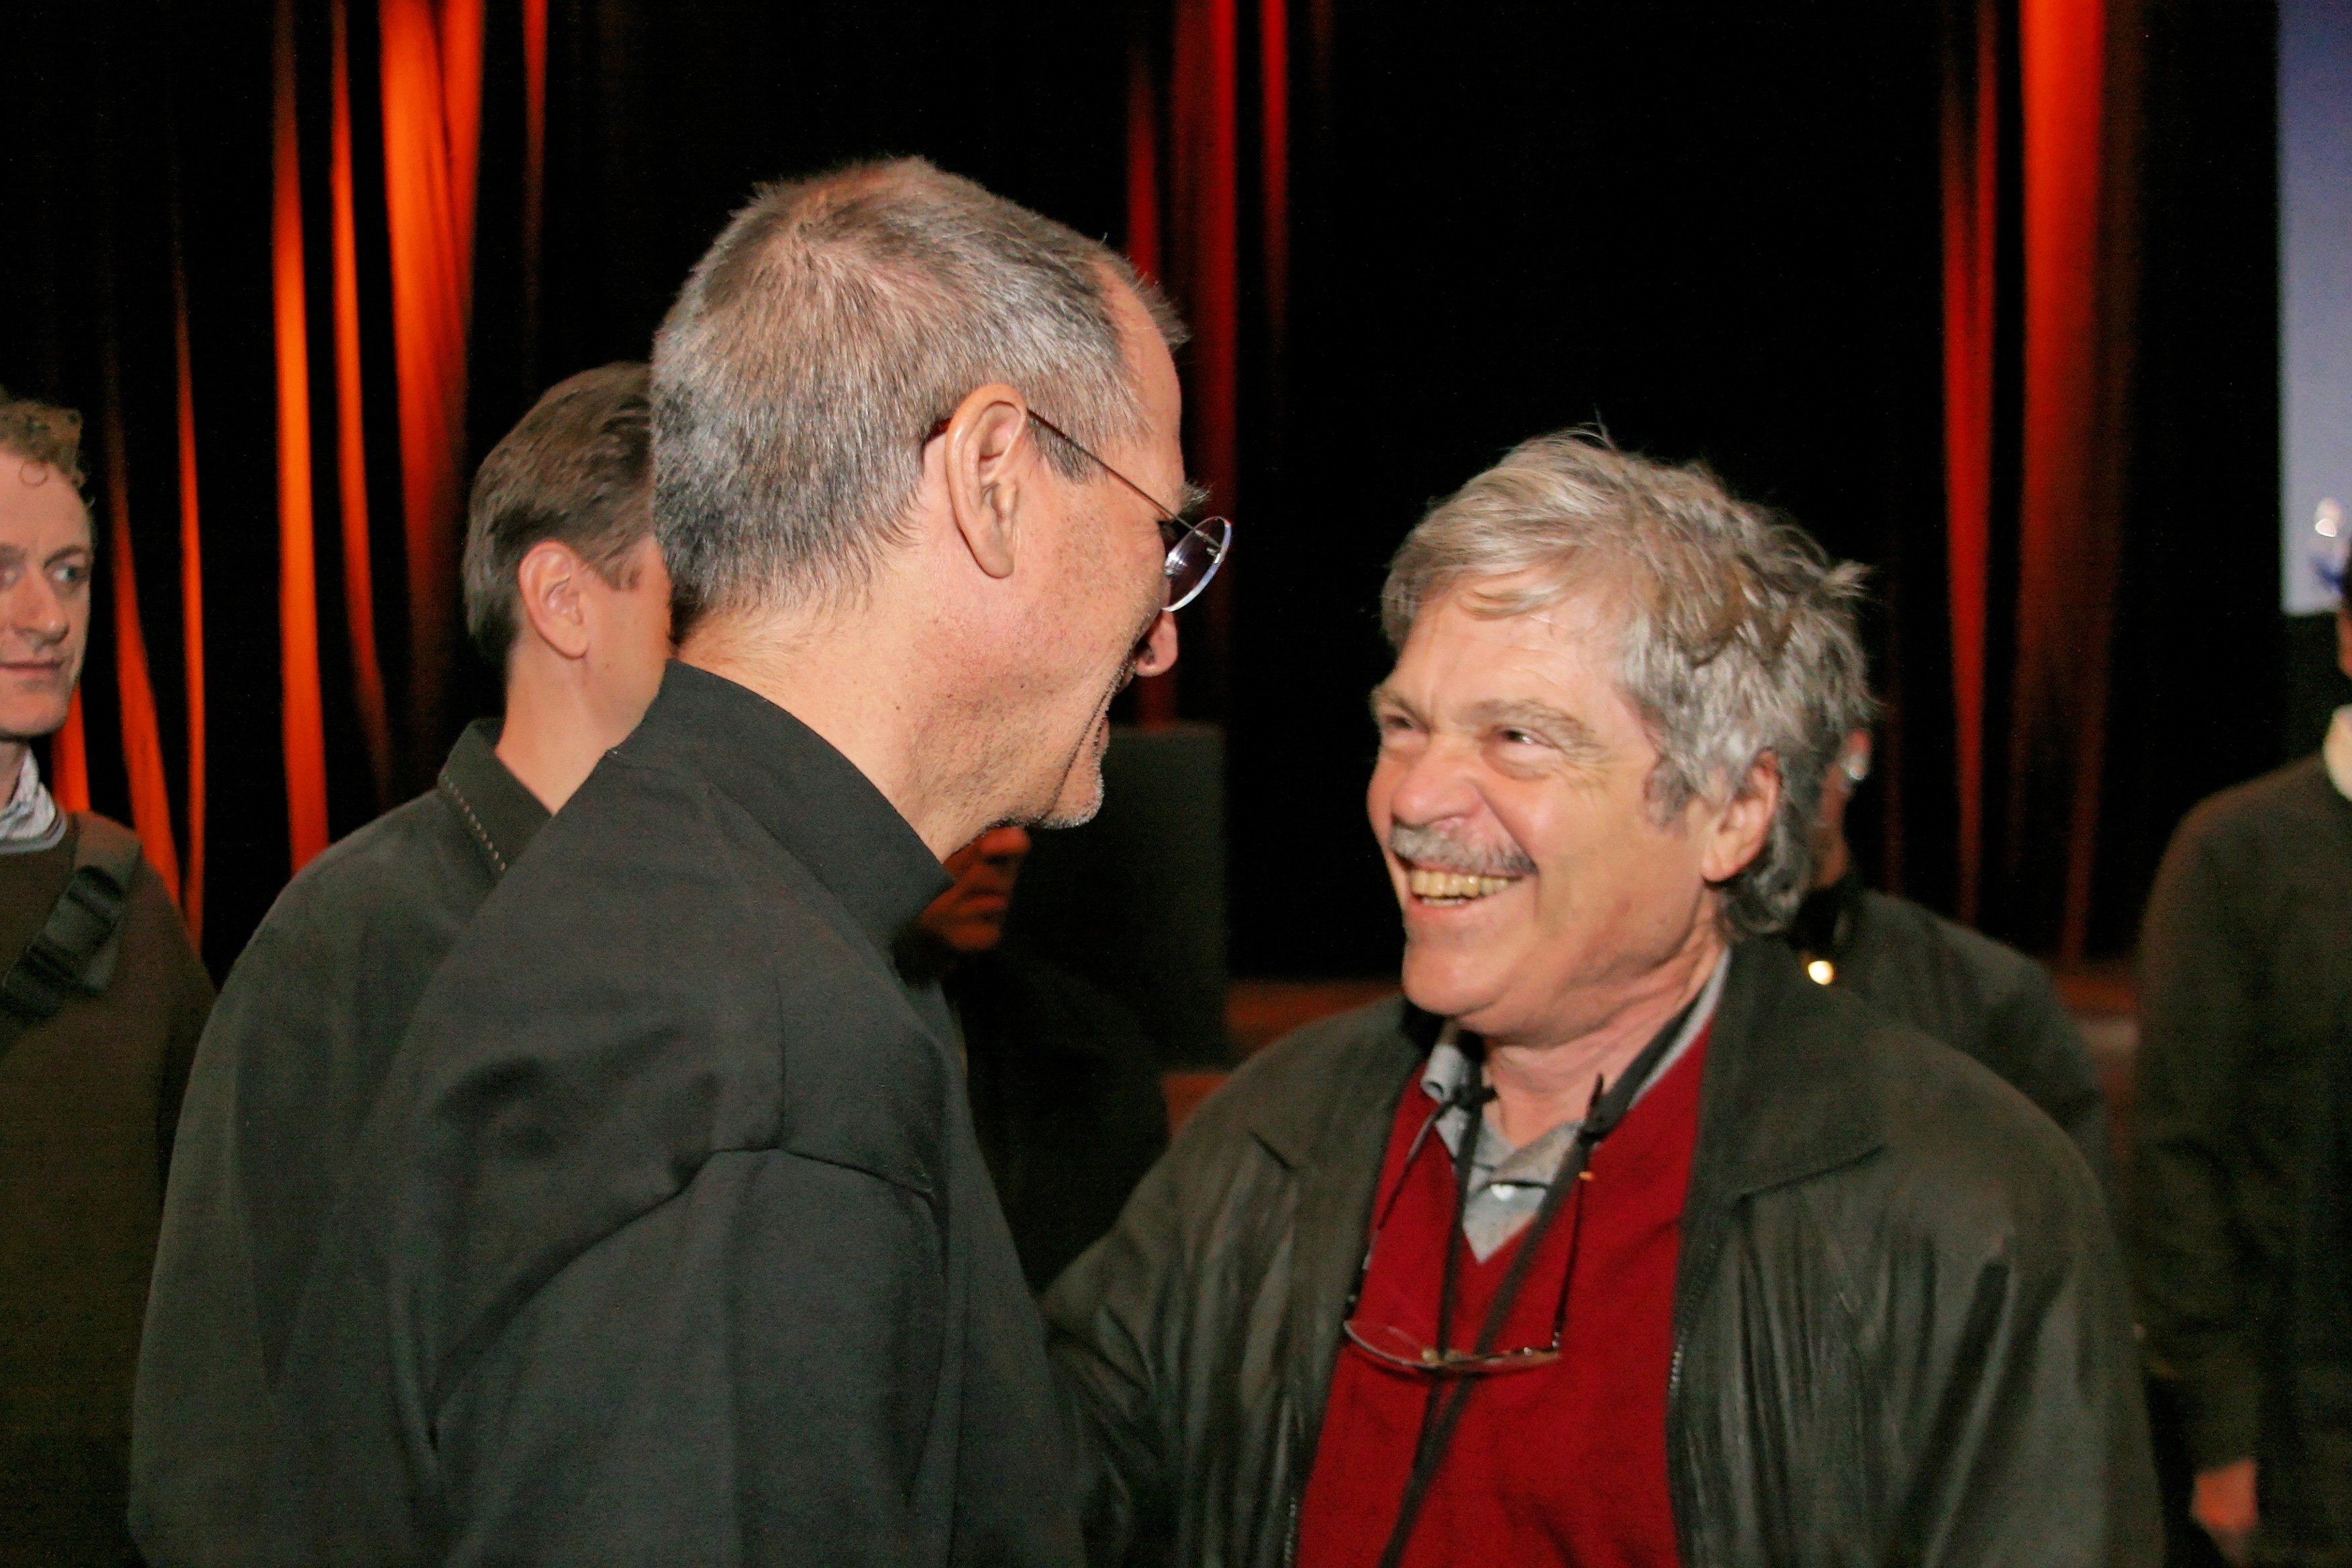 Steve Jobs and Alan Kay after the Macworld 2007 keynote, 9 Jan 2007